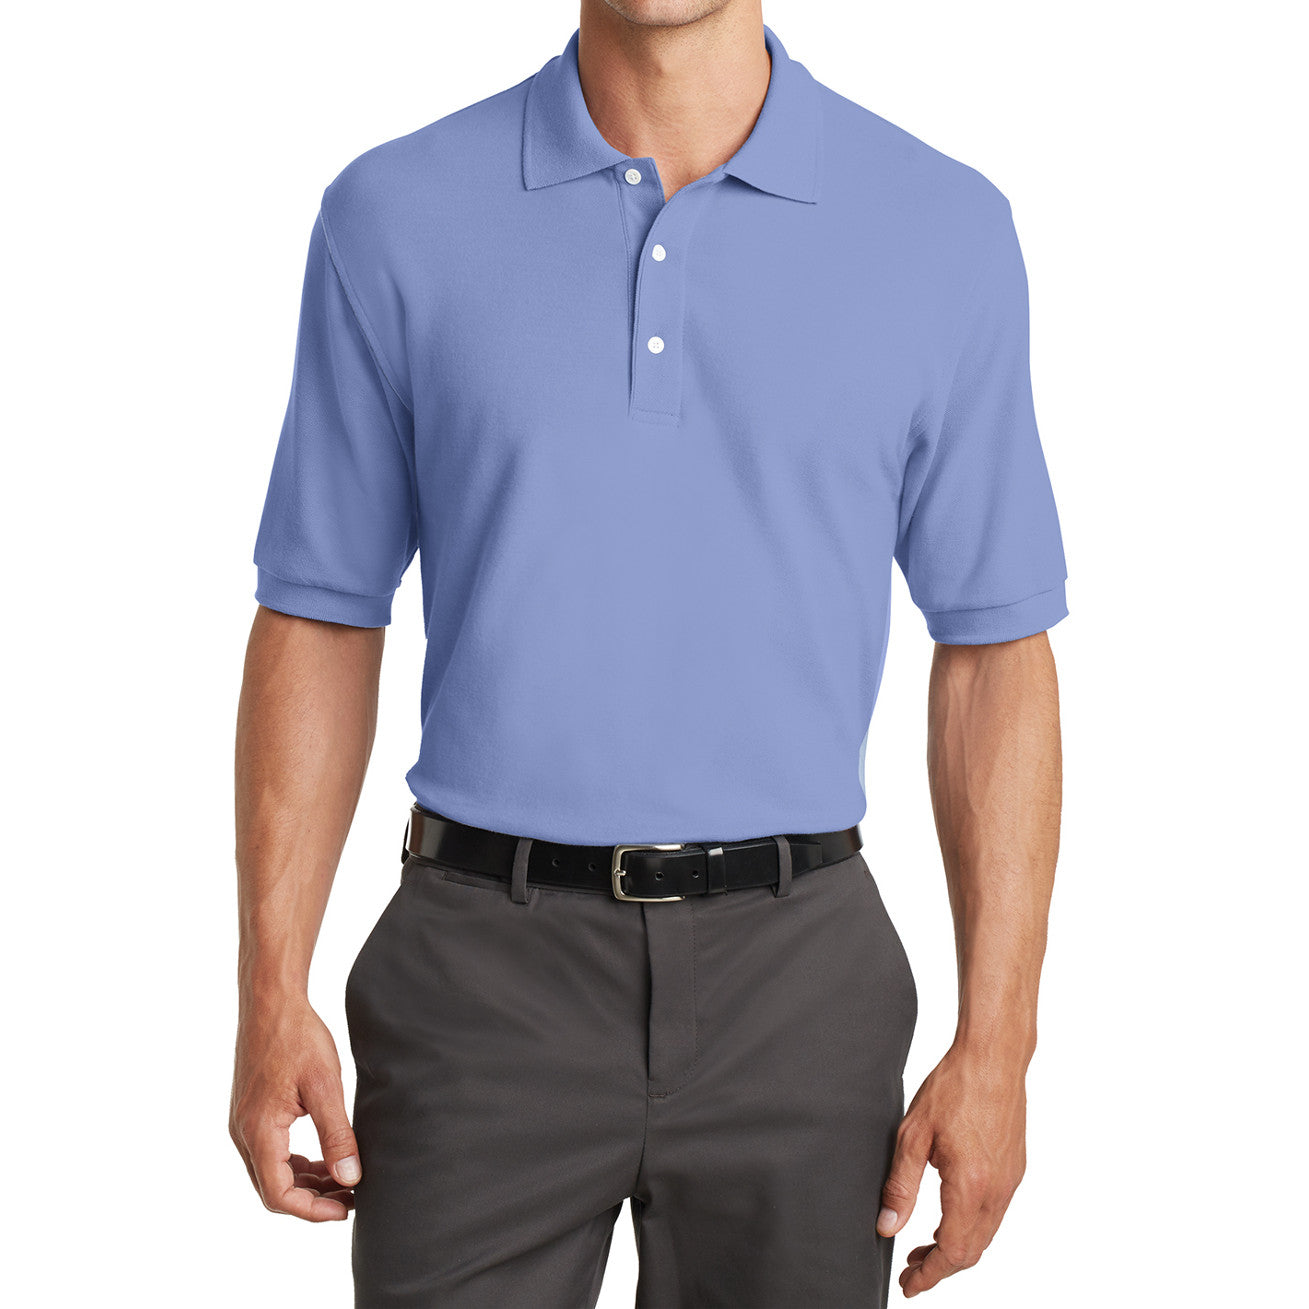 Men's 100% Pima Cotton Polo Shirt